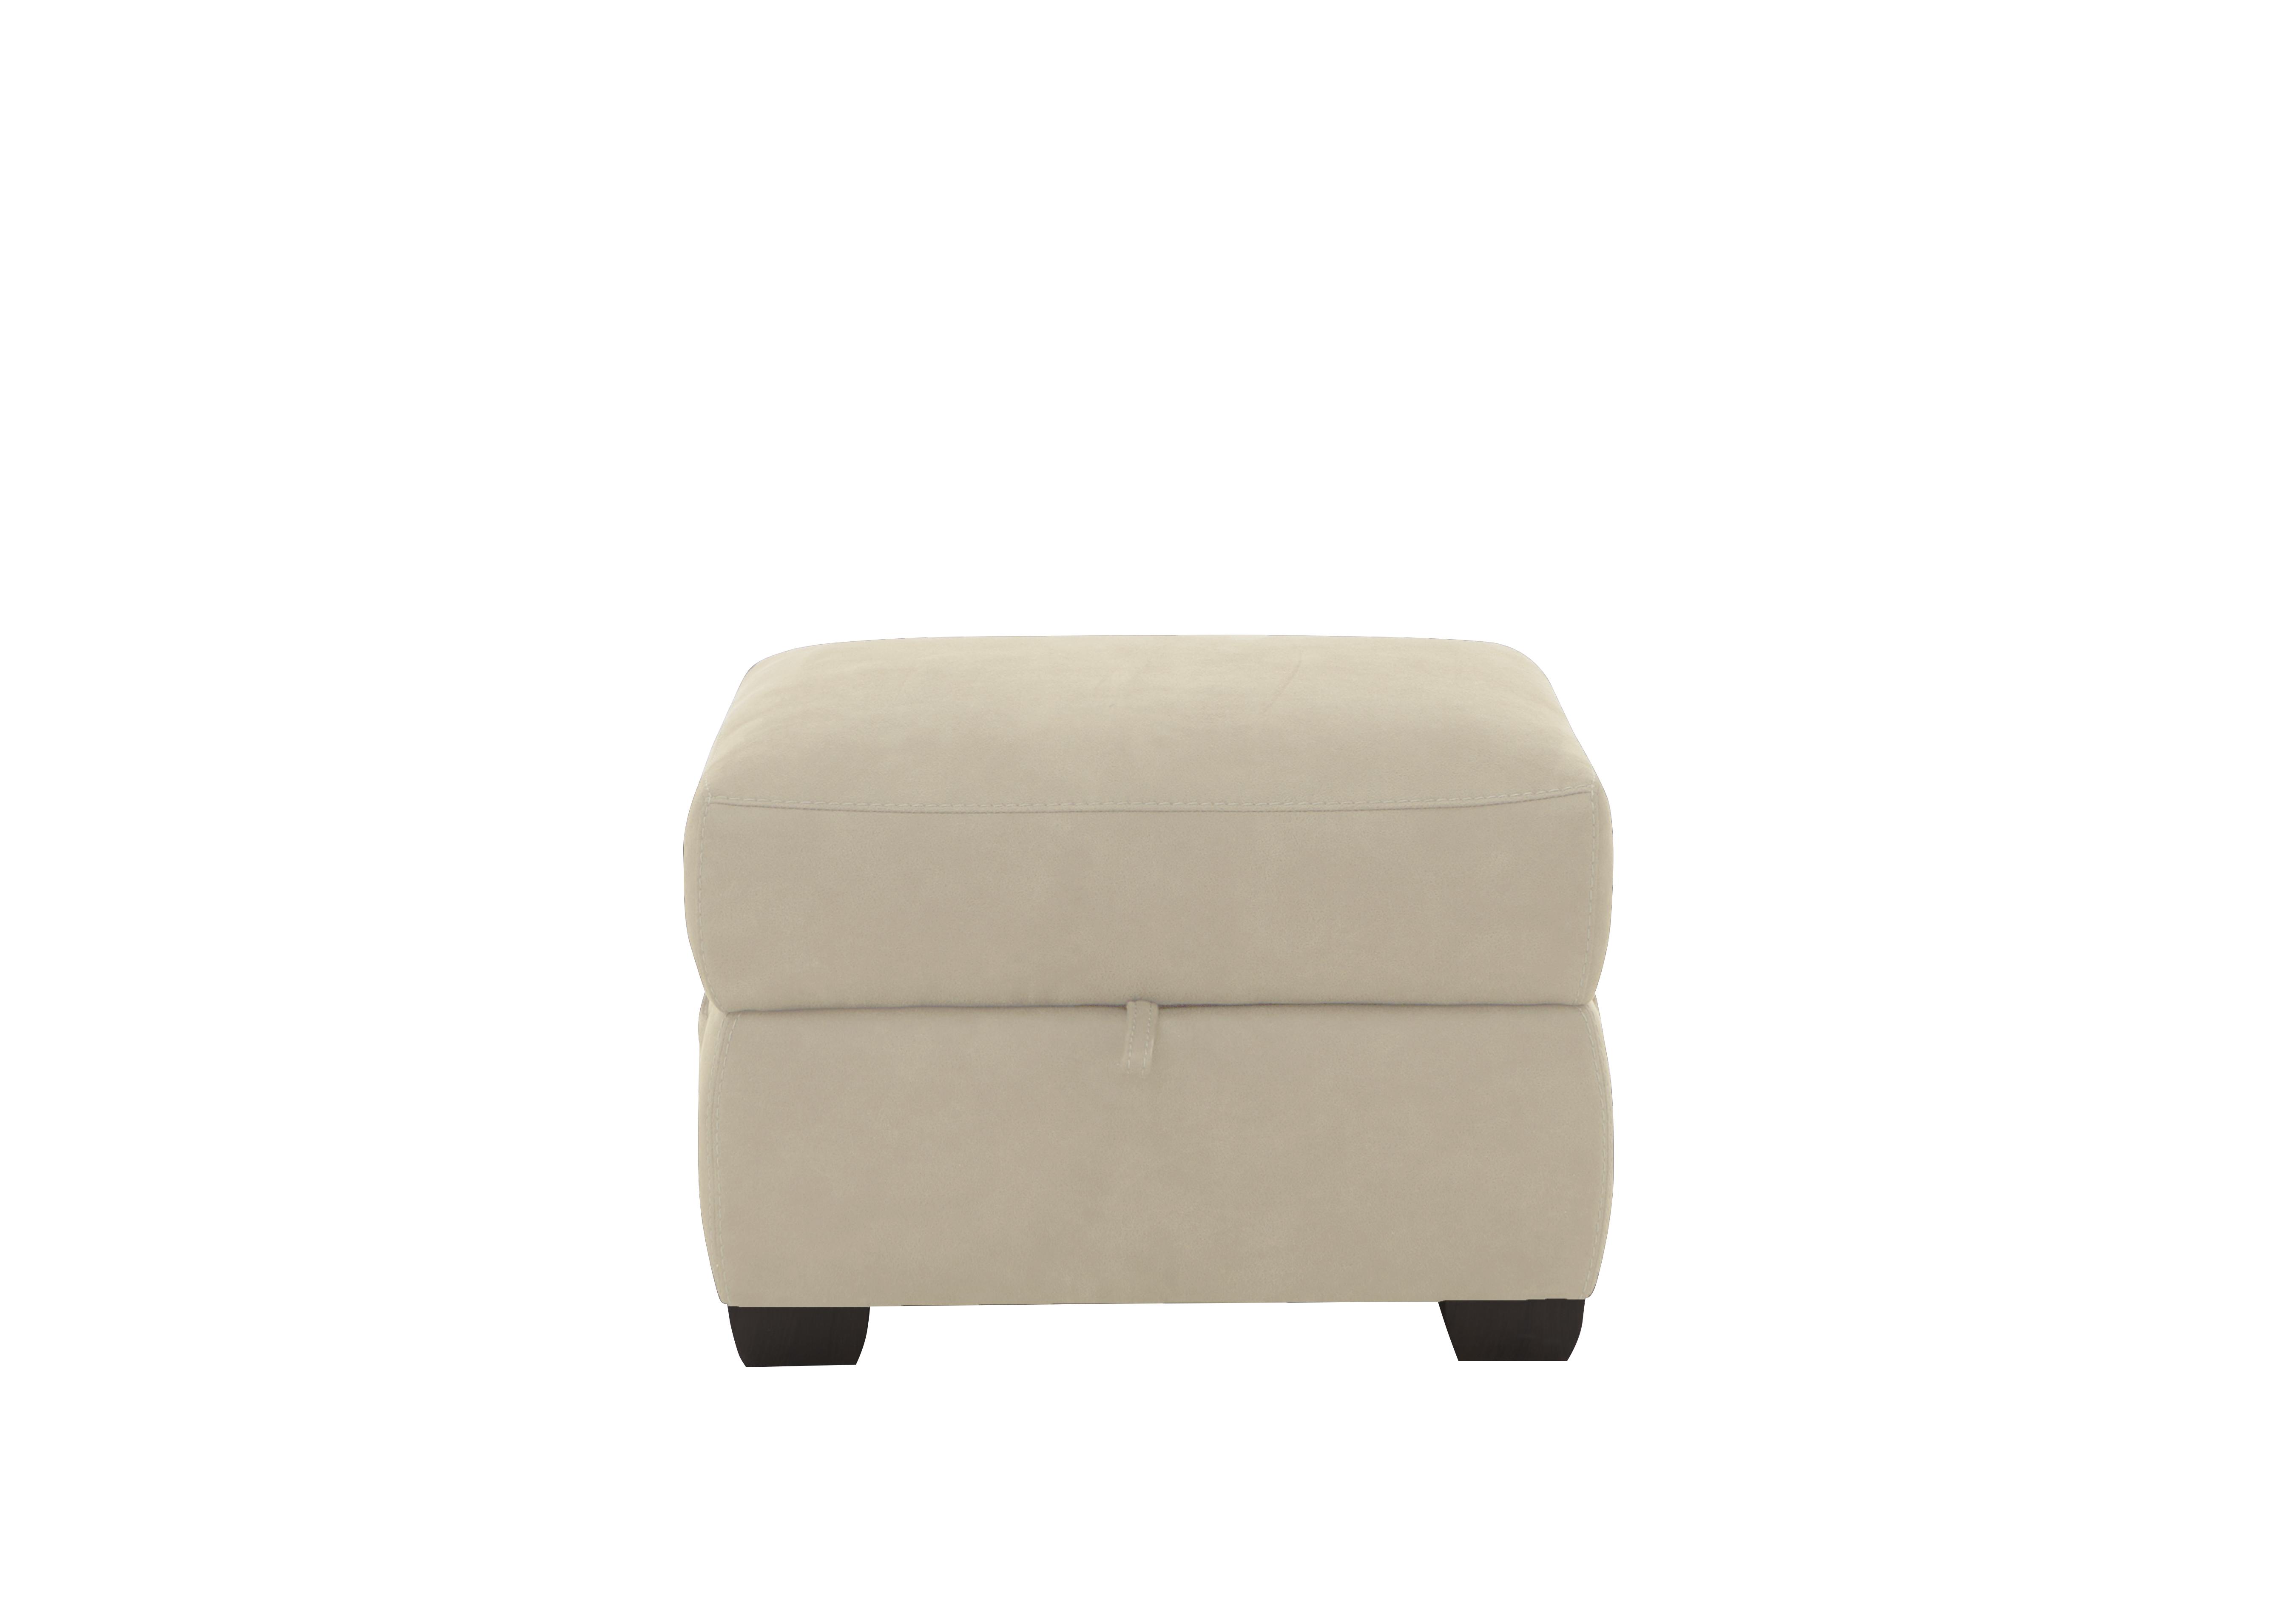 Optimus Fabric Storage Footstool in Bfa-Blj-R20 Bisque on Furniture Village